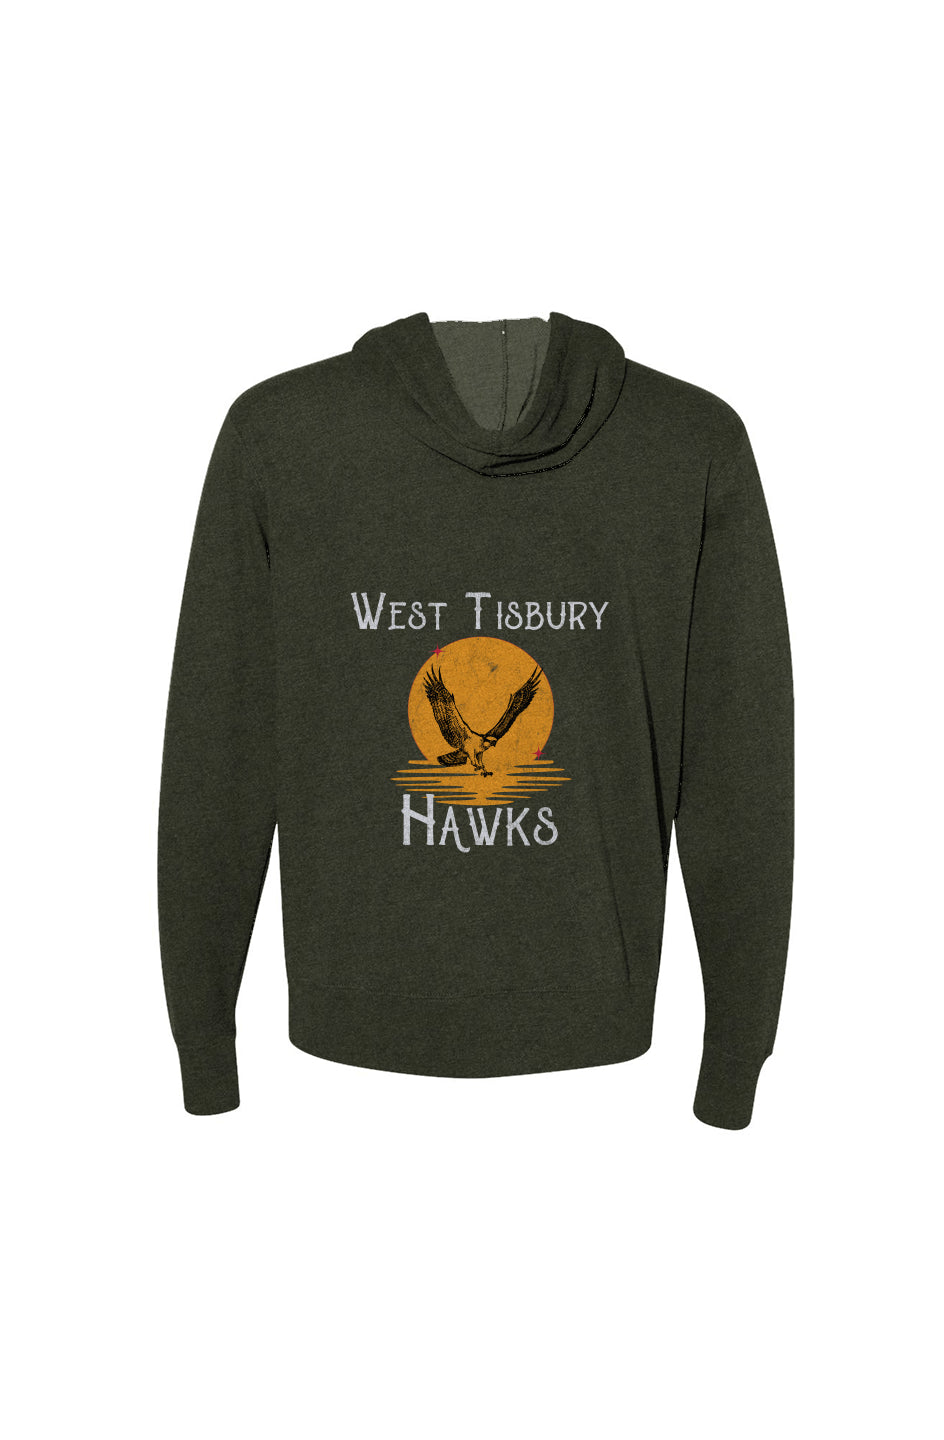 West Tisbury Hawks French Terry Zip-Up Hoodie